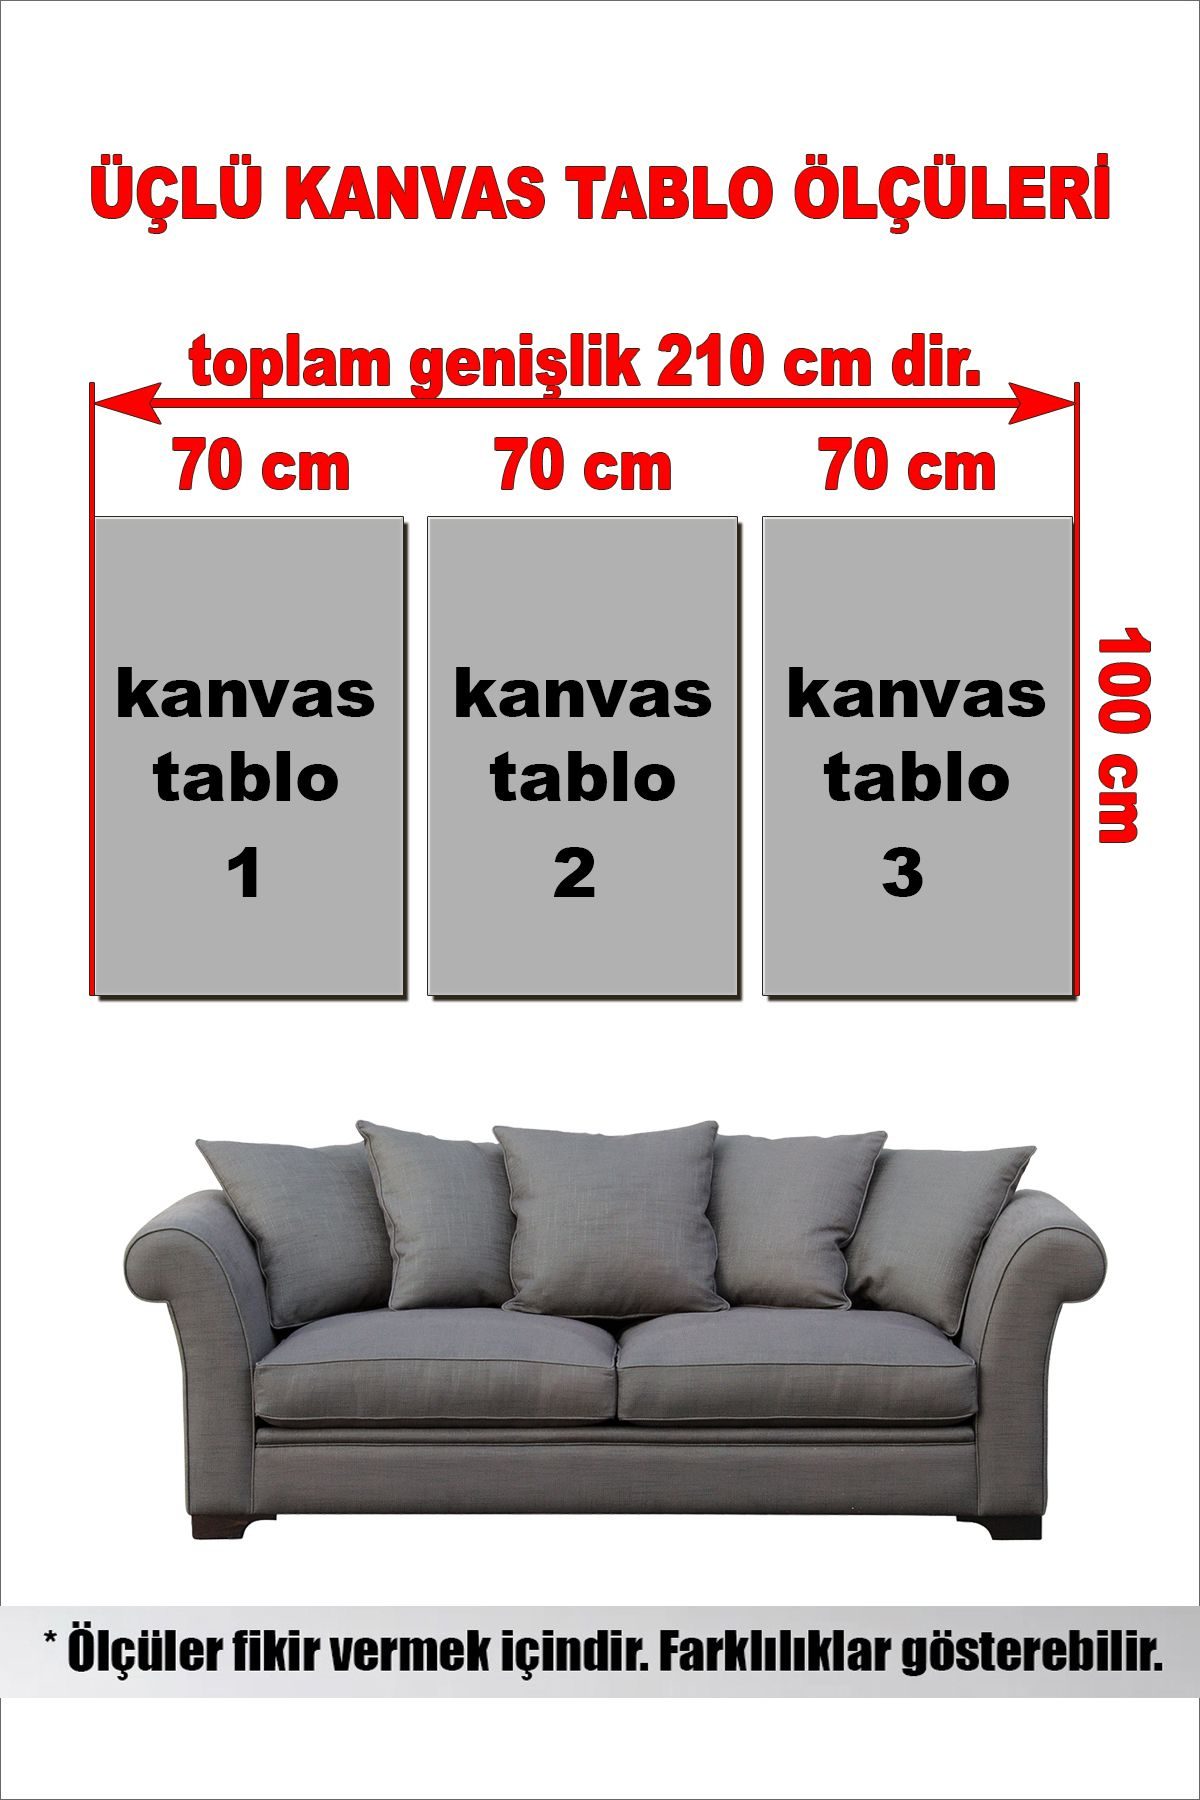 CLZ104 KARELETRİN GEÇİŞİ.jpg  (210 x 100) cm